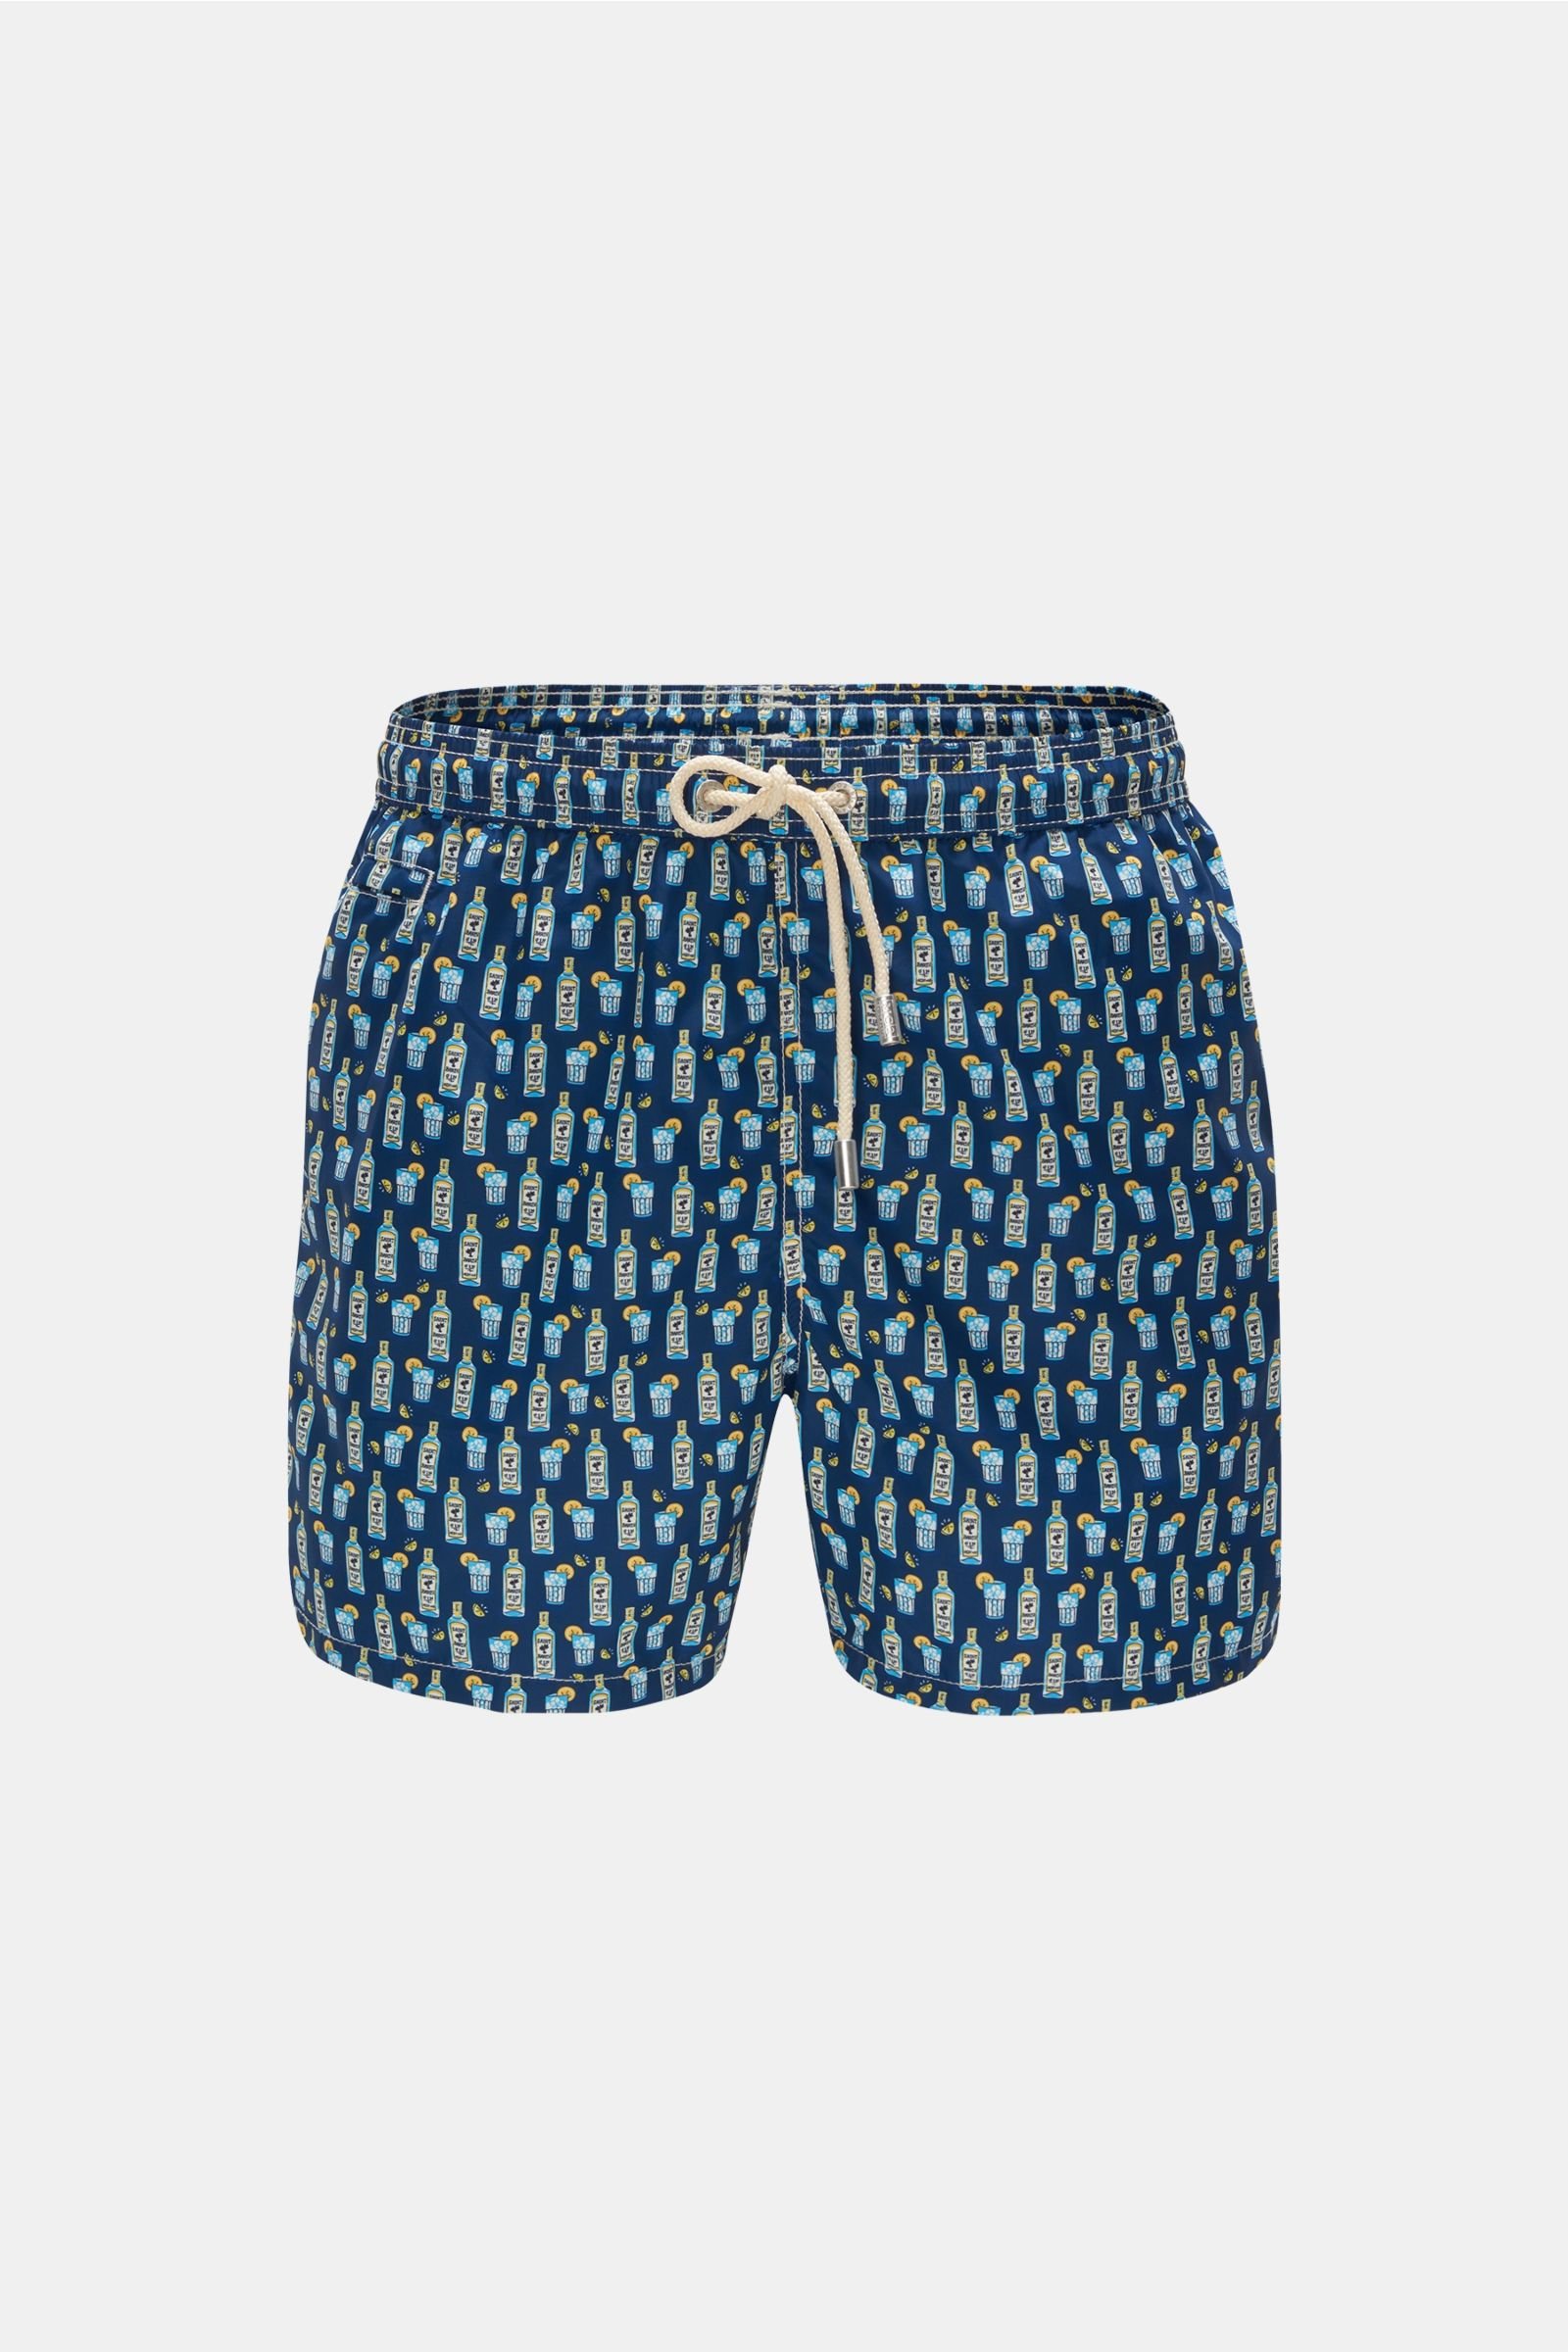 Swim shorts 'Ginx' dark blue/light blue patterned